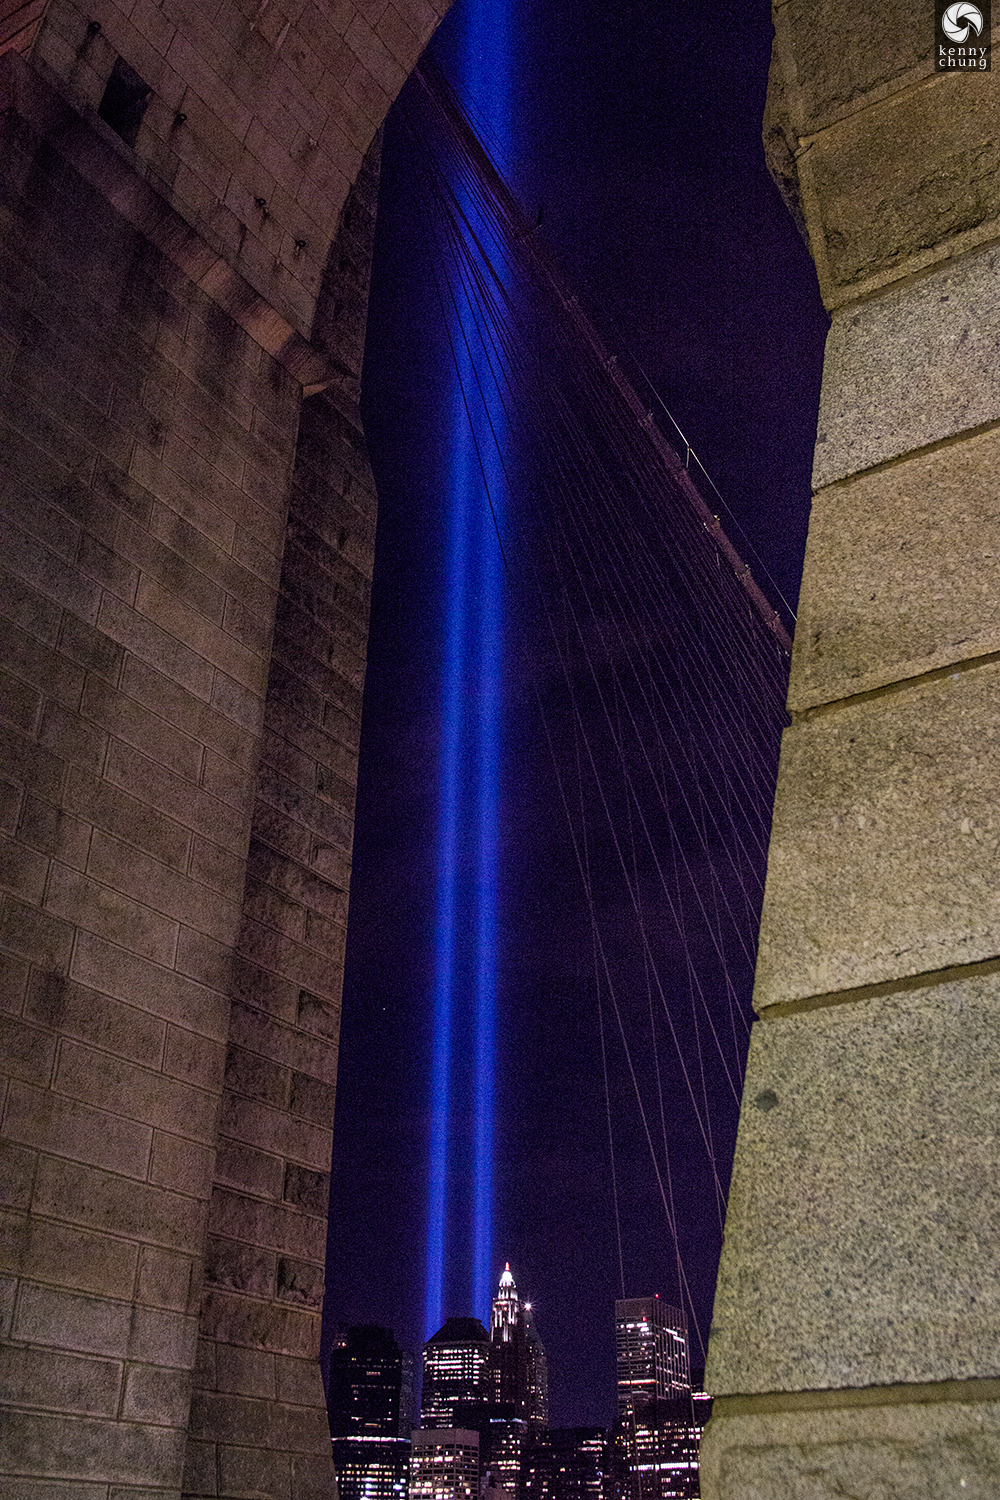 9/11 Lights through the Brooklyn Bridge arches